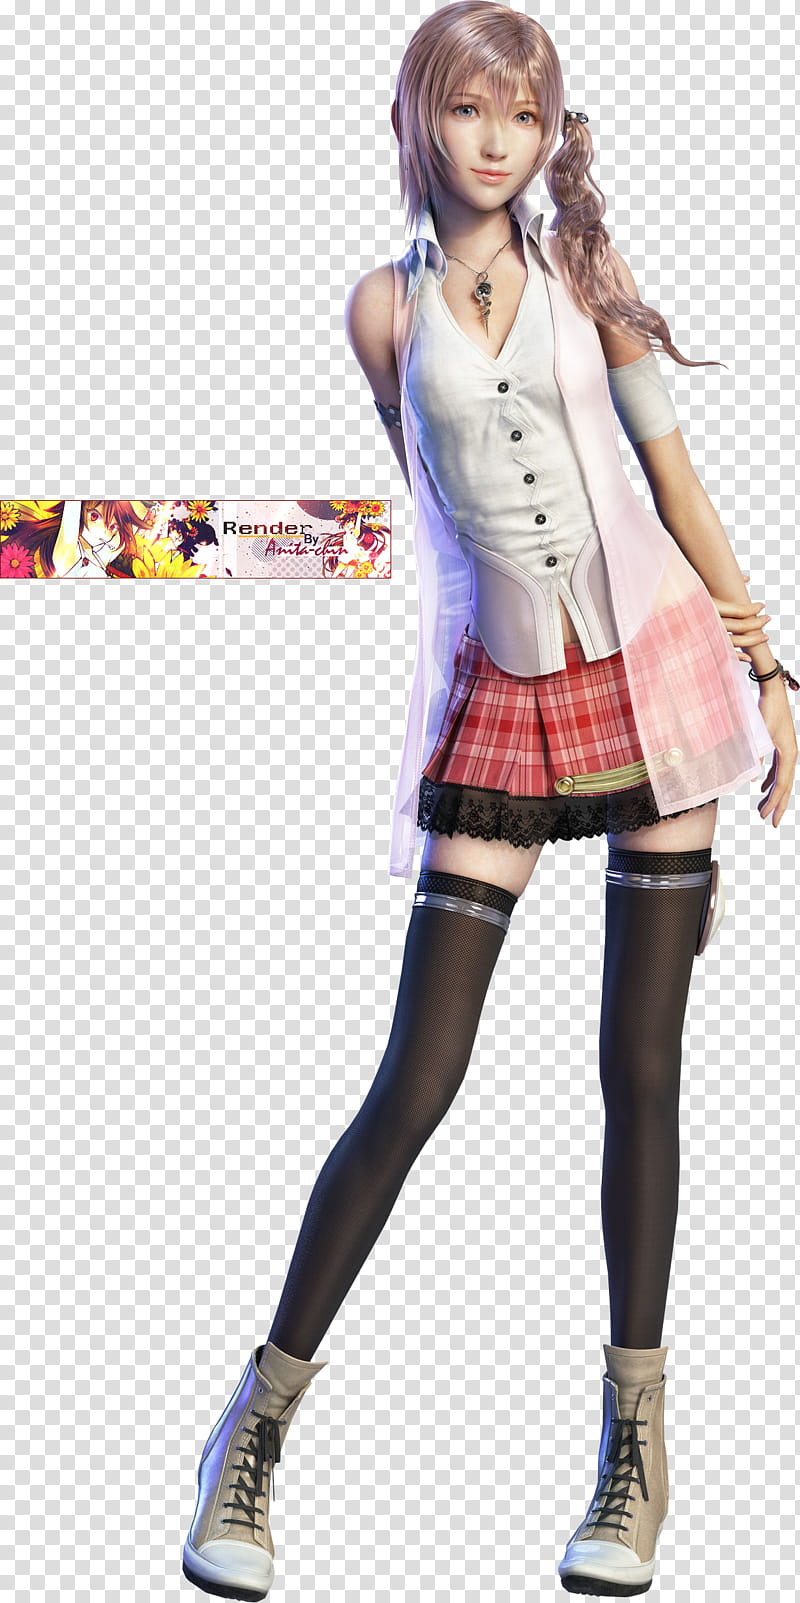 Final Fantasy girl character illustration transparent background PNG clipart